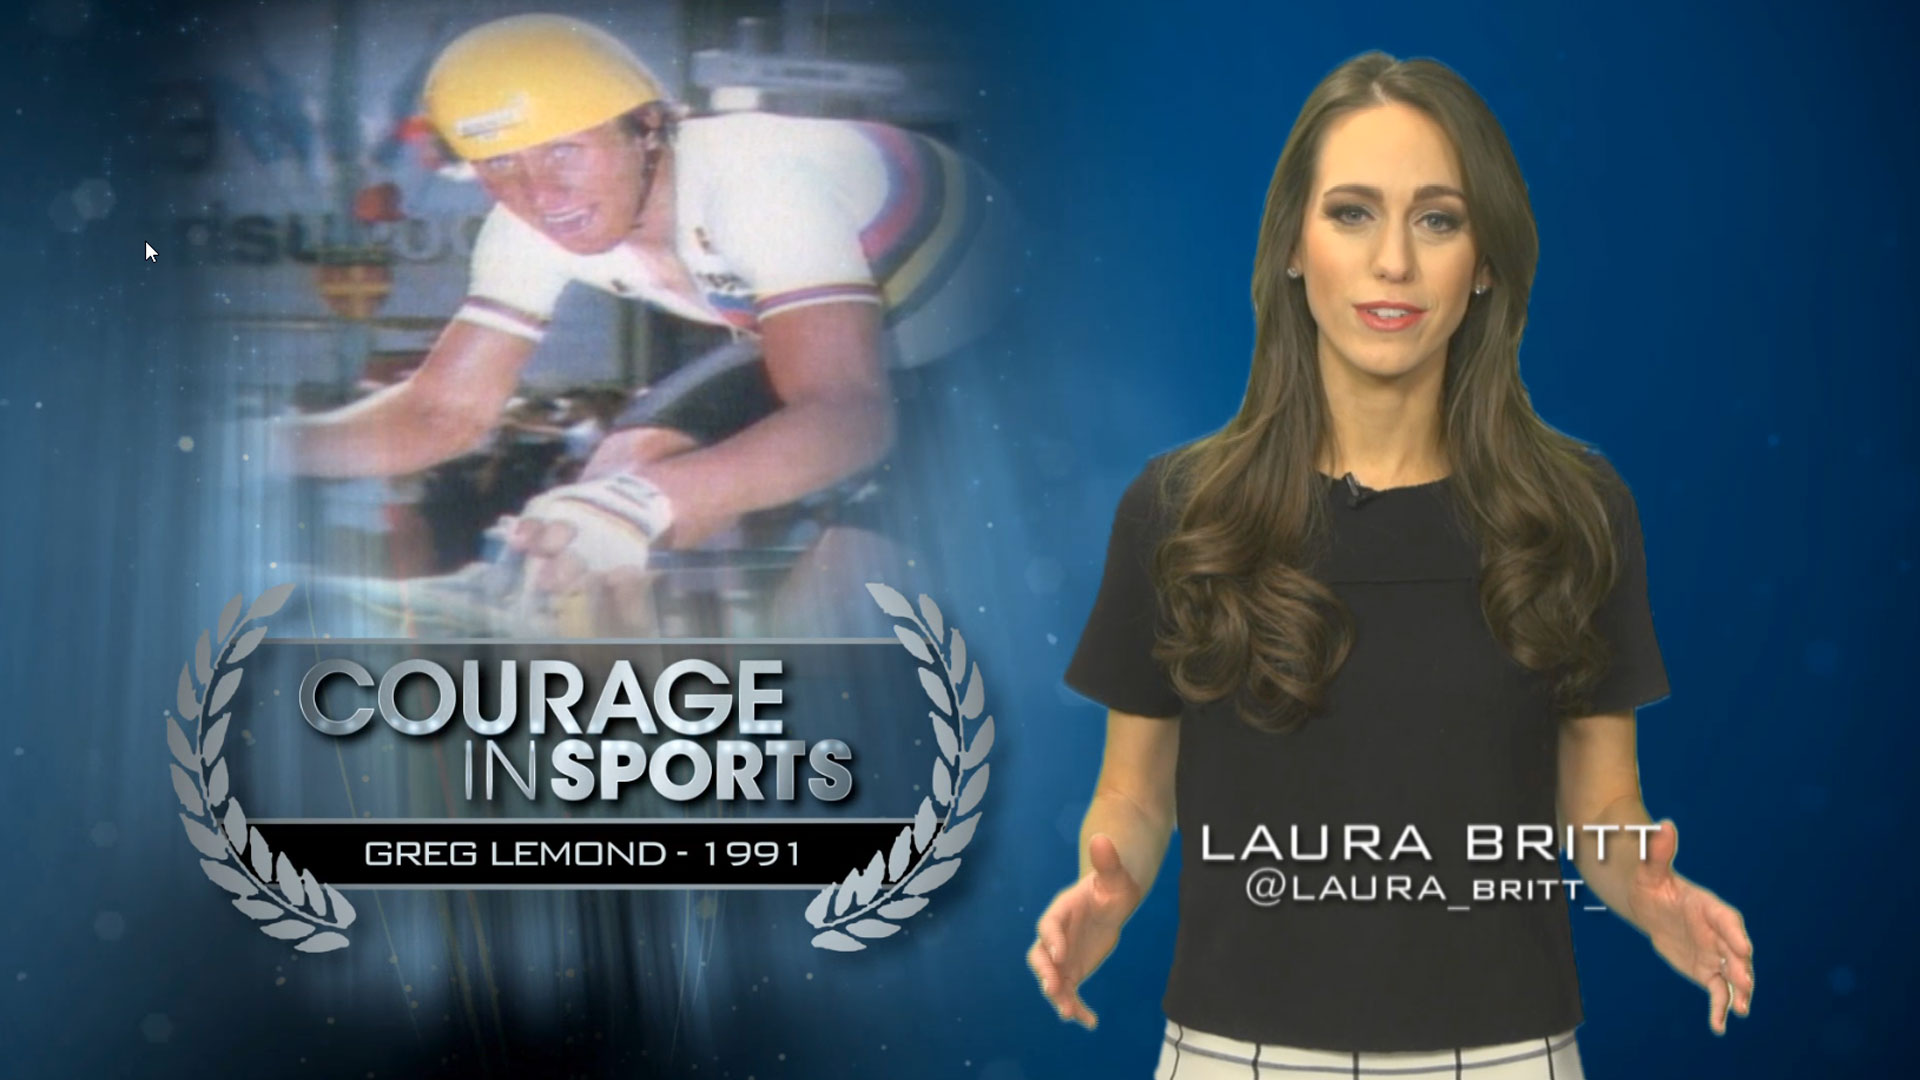 Back on the bike: Greg LeMond's story | Other Sports | Sporting News1920 x 1080